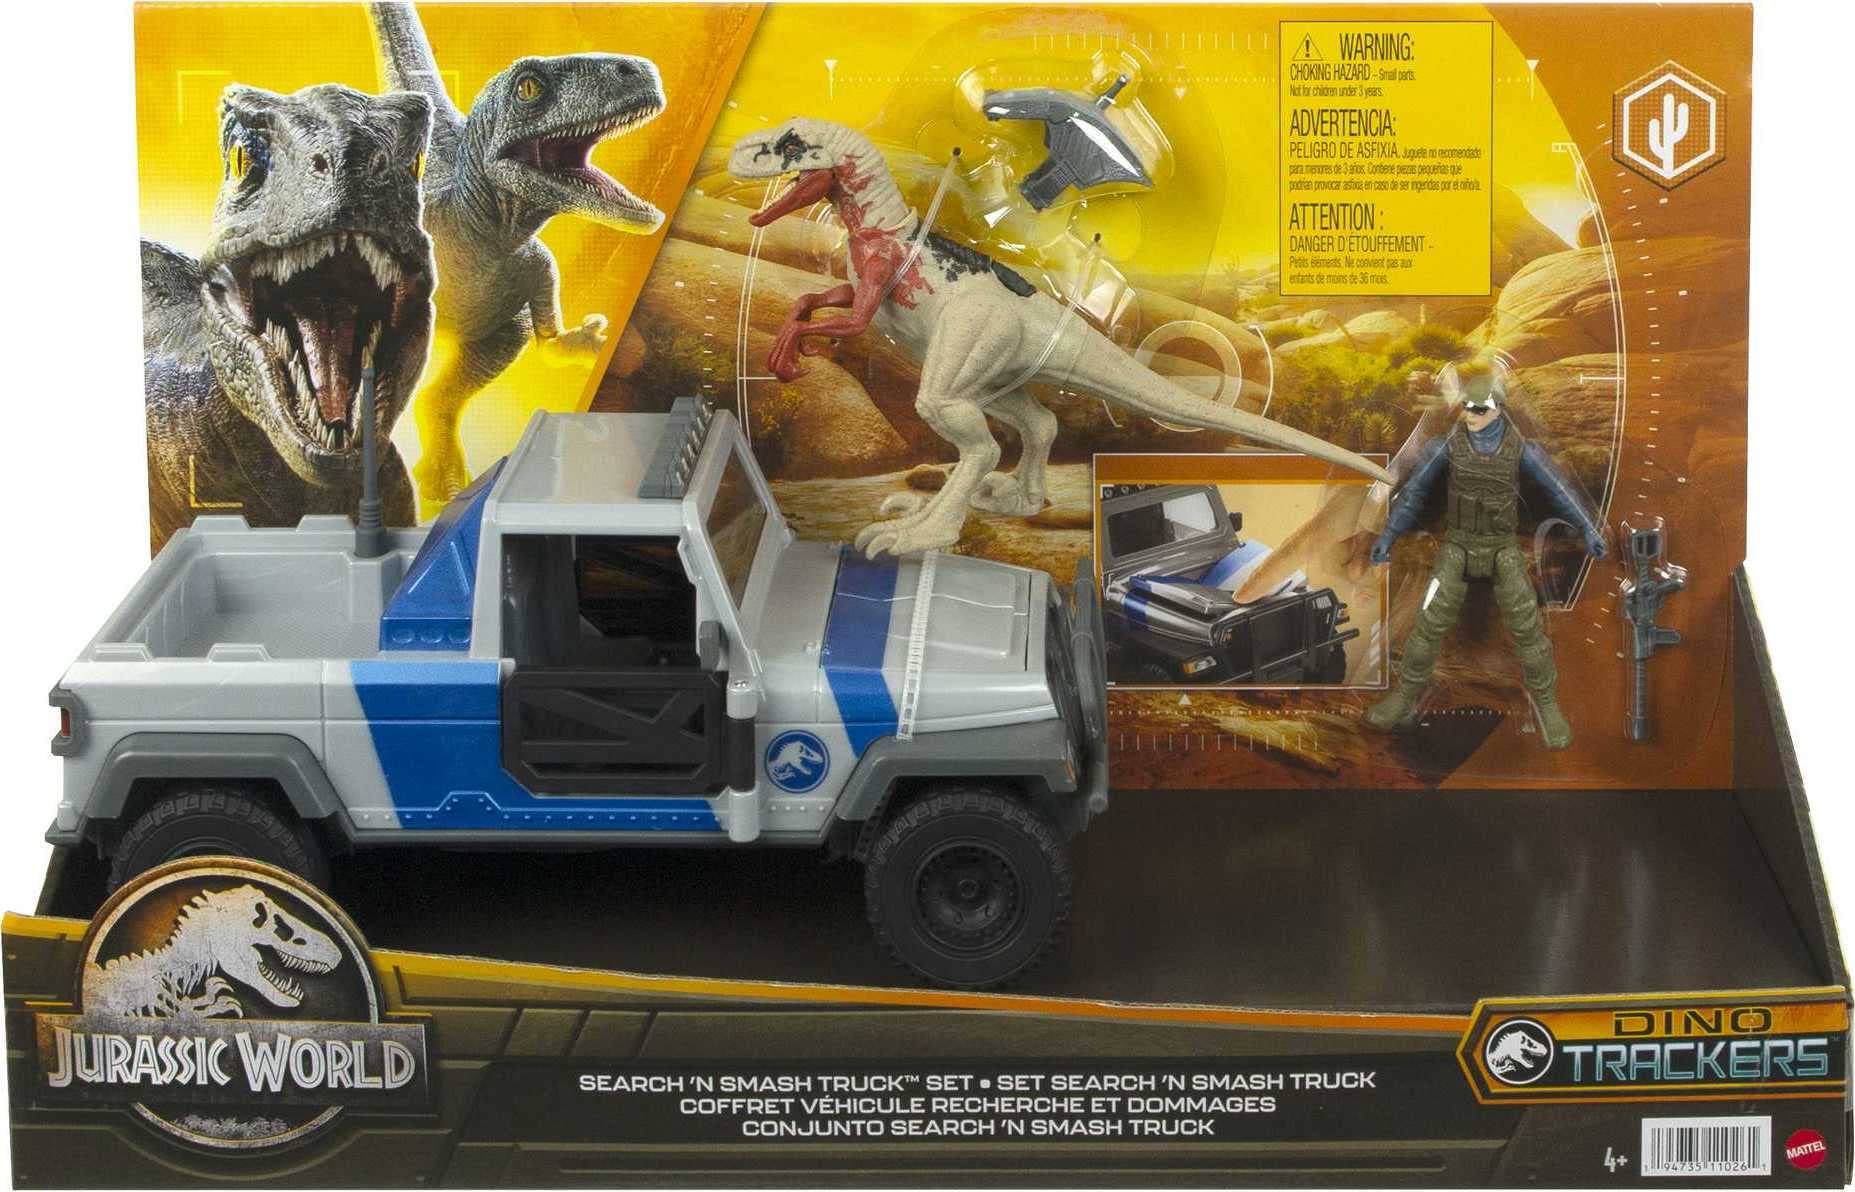 5-Piece 3.75" Scale Mattel Jurassic World Search 'N Smash Truck Set w/ Atrociraptor Dinosaur & Human Action Figure $11.50 + Free Shipping w/ Prime or on $35+